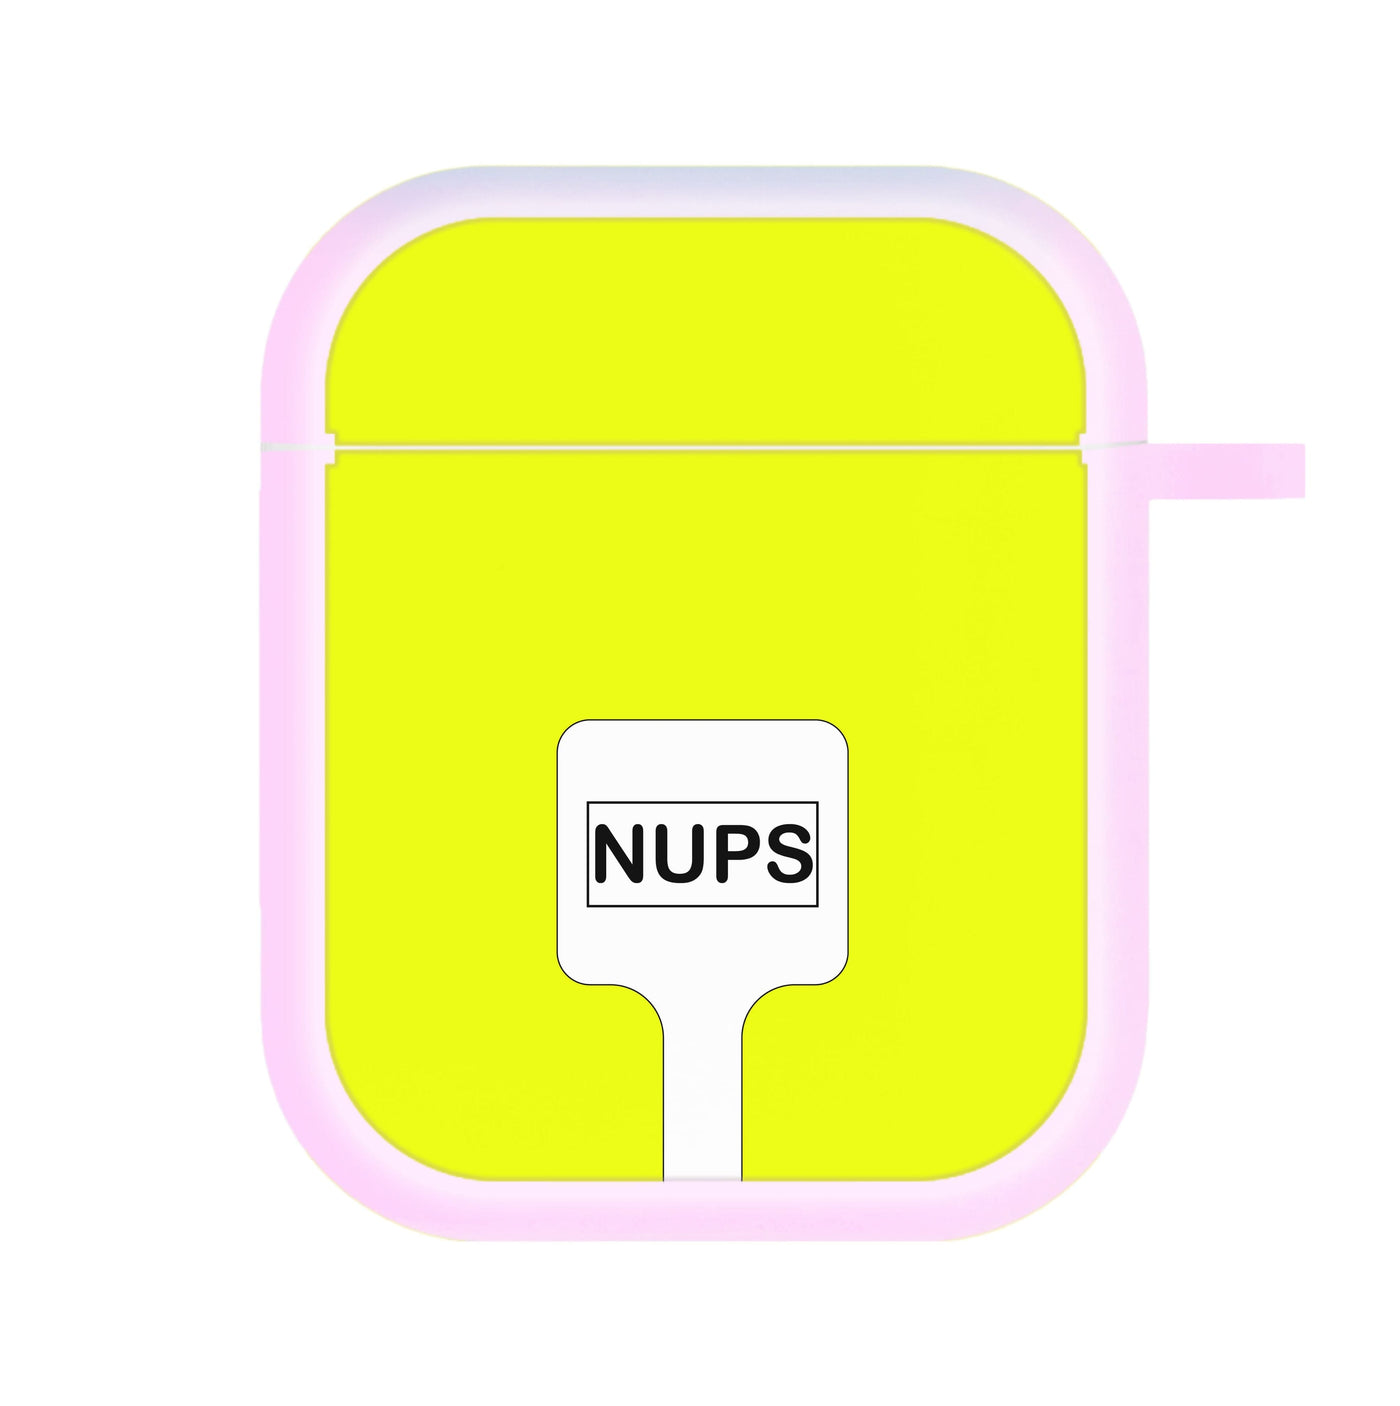 Nups - Brooklyn Nine-Nine AirPods Case